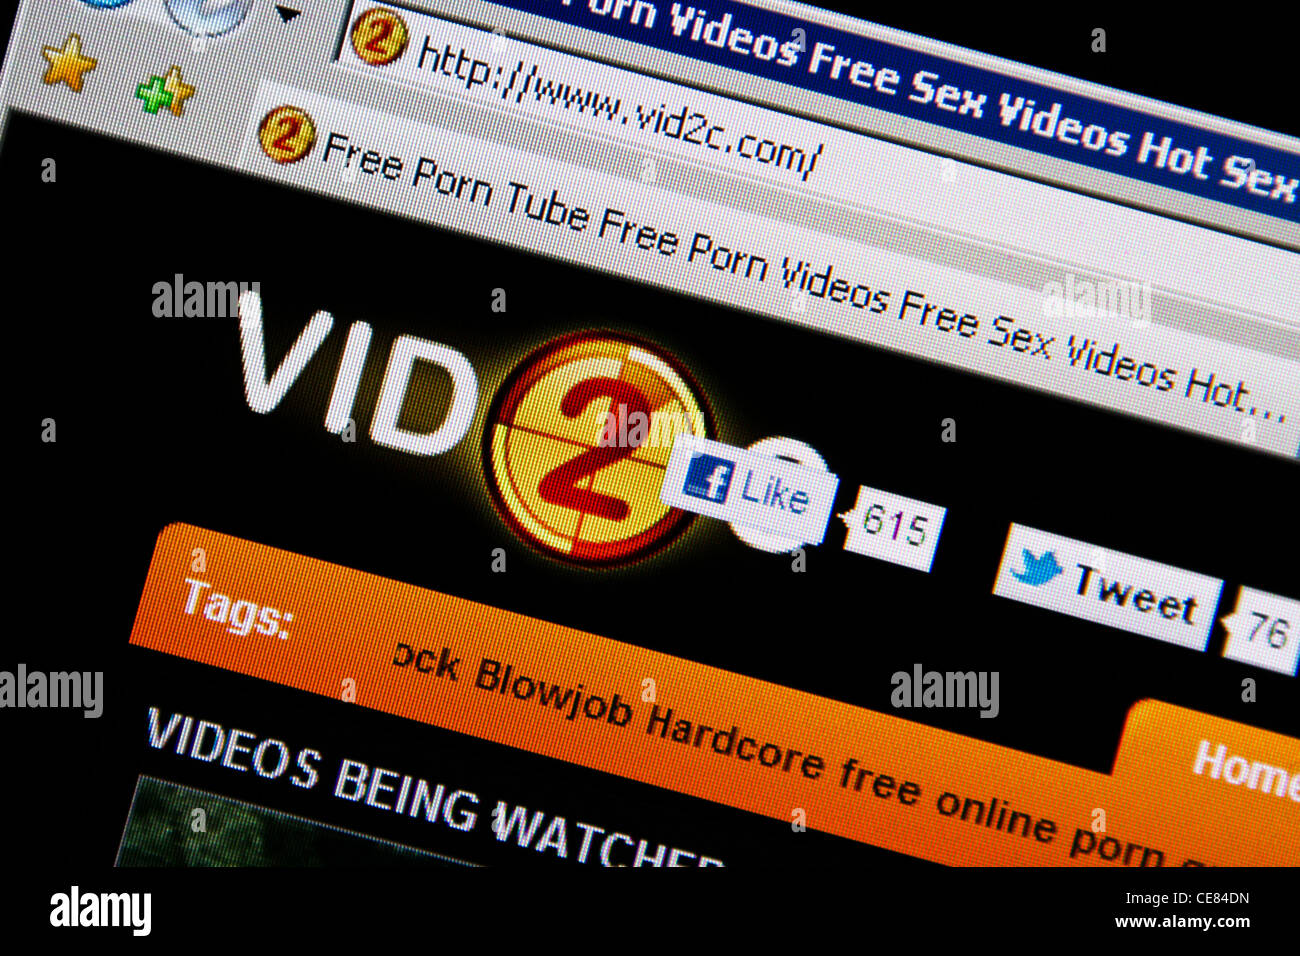 sex video movie online website vid2c Stock Photo image photo pic